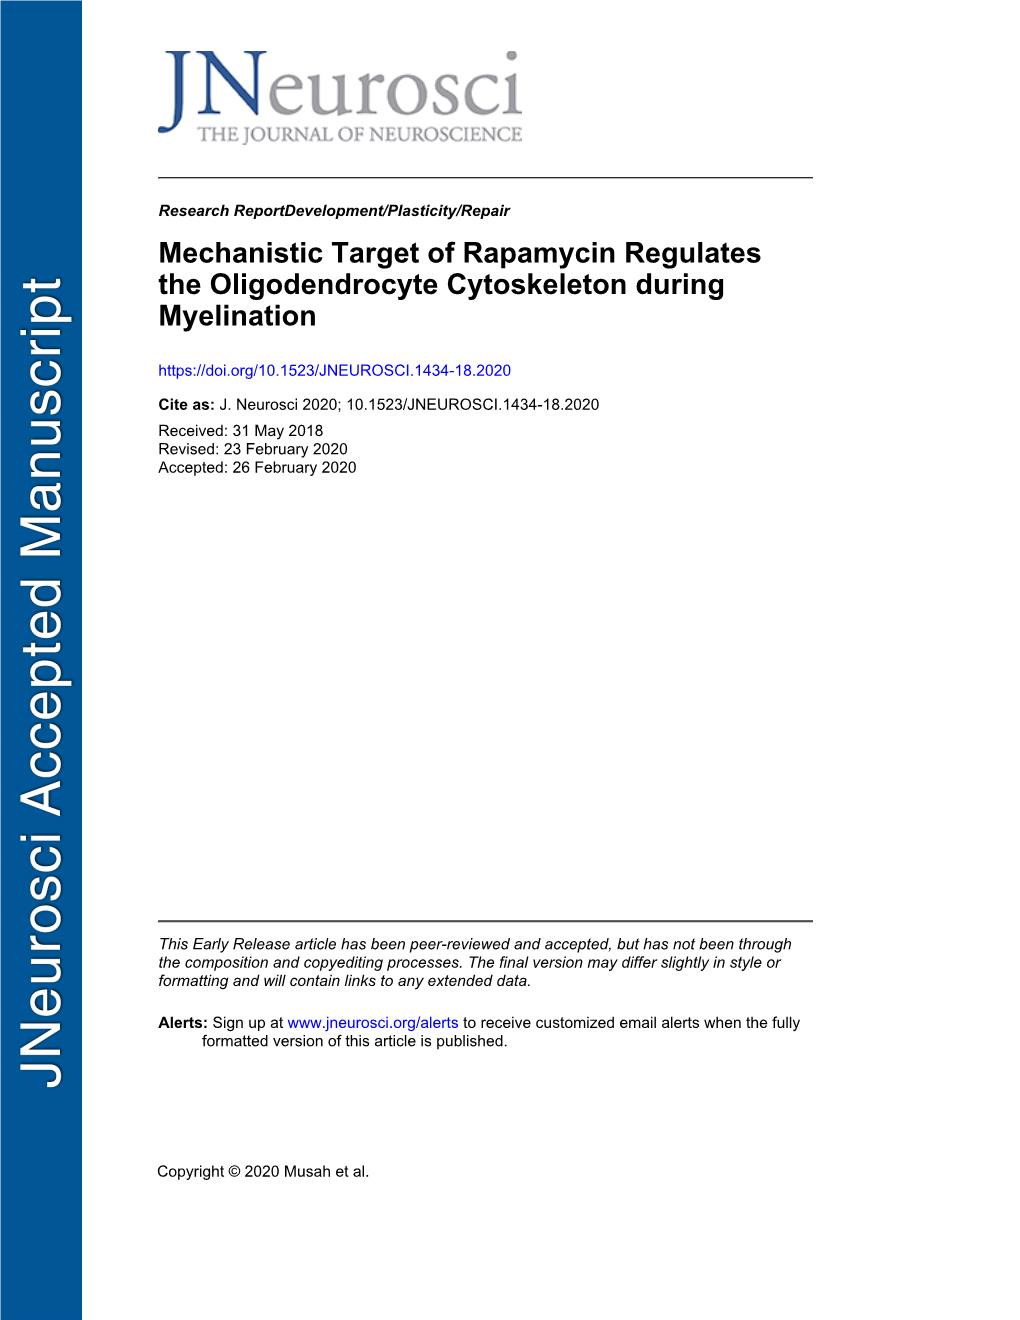 Mechanistic Target of Rapamycin Regulates the Oligodendrocyte Cytoskeleton During Myelination